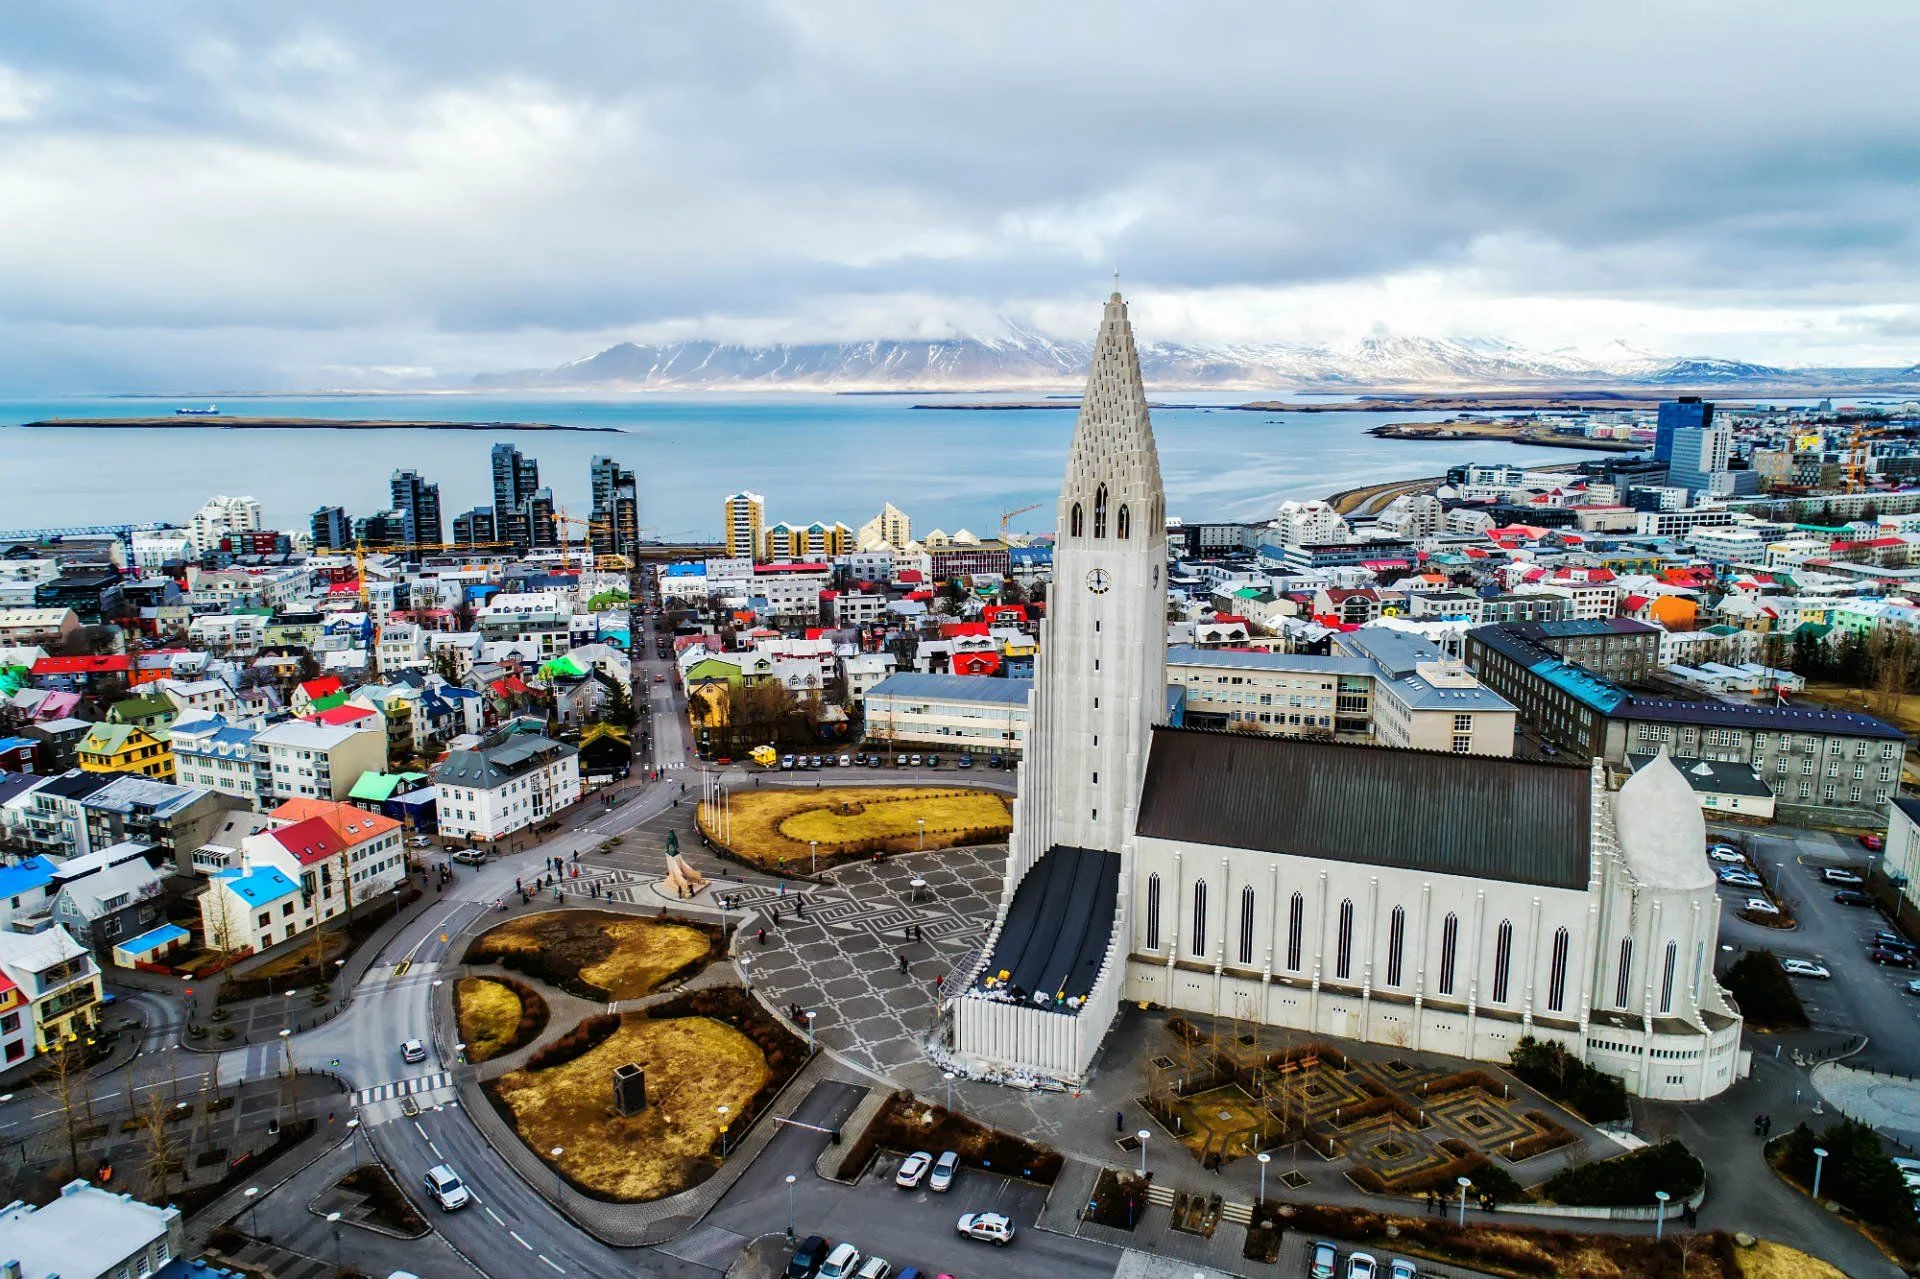 what makes Iceland so unique